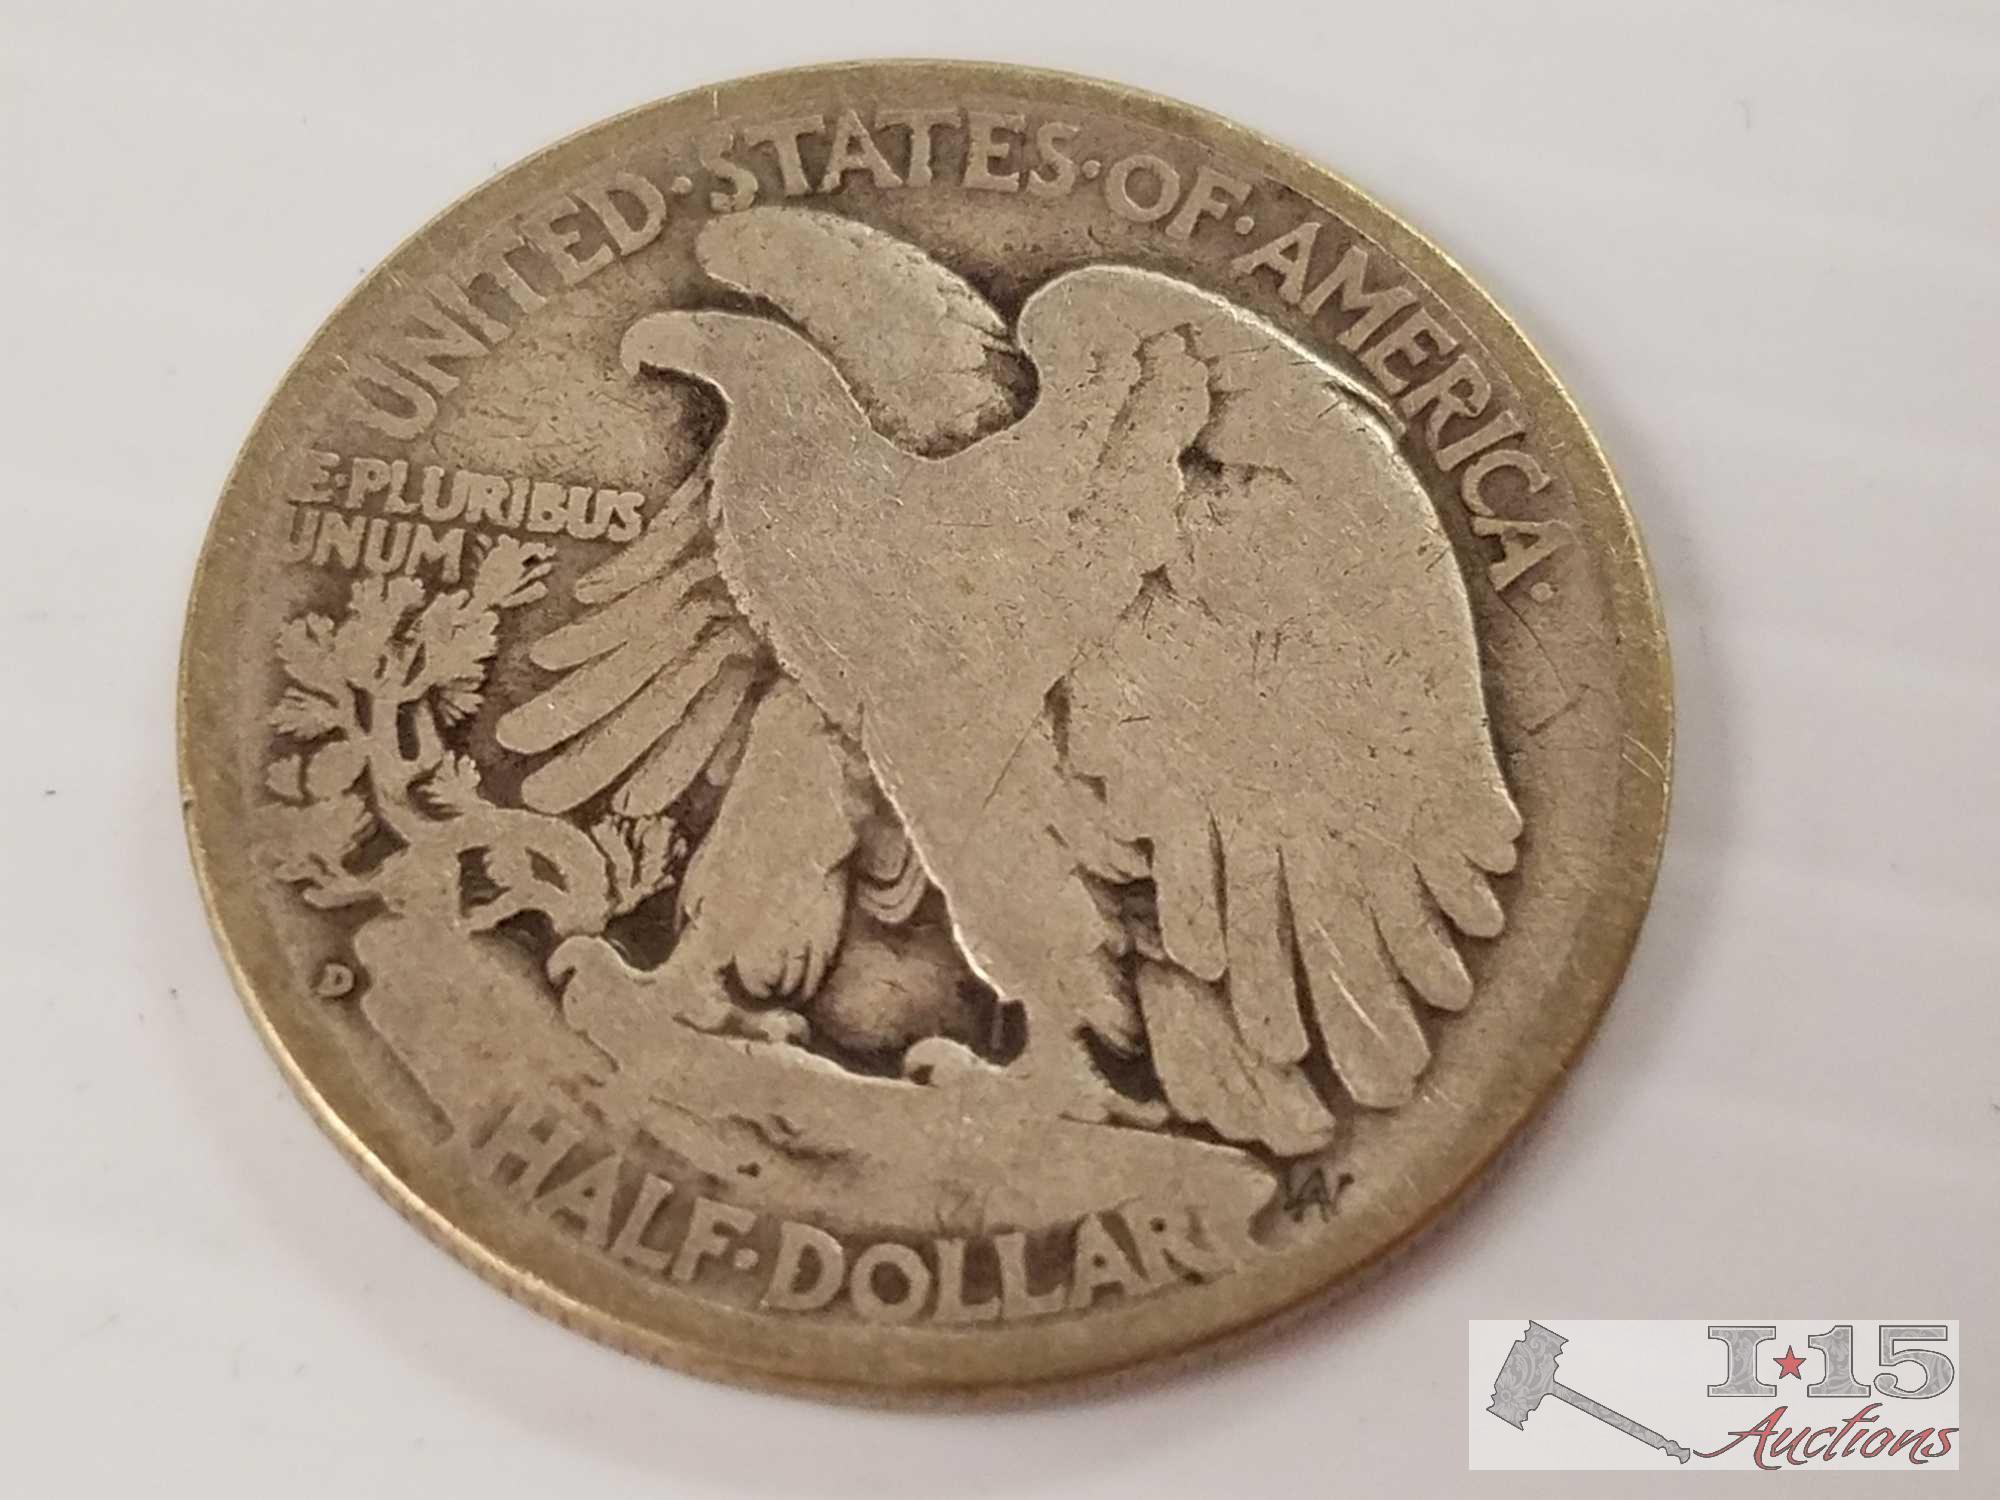 13 Liberty half dollars: 1920 - 1944